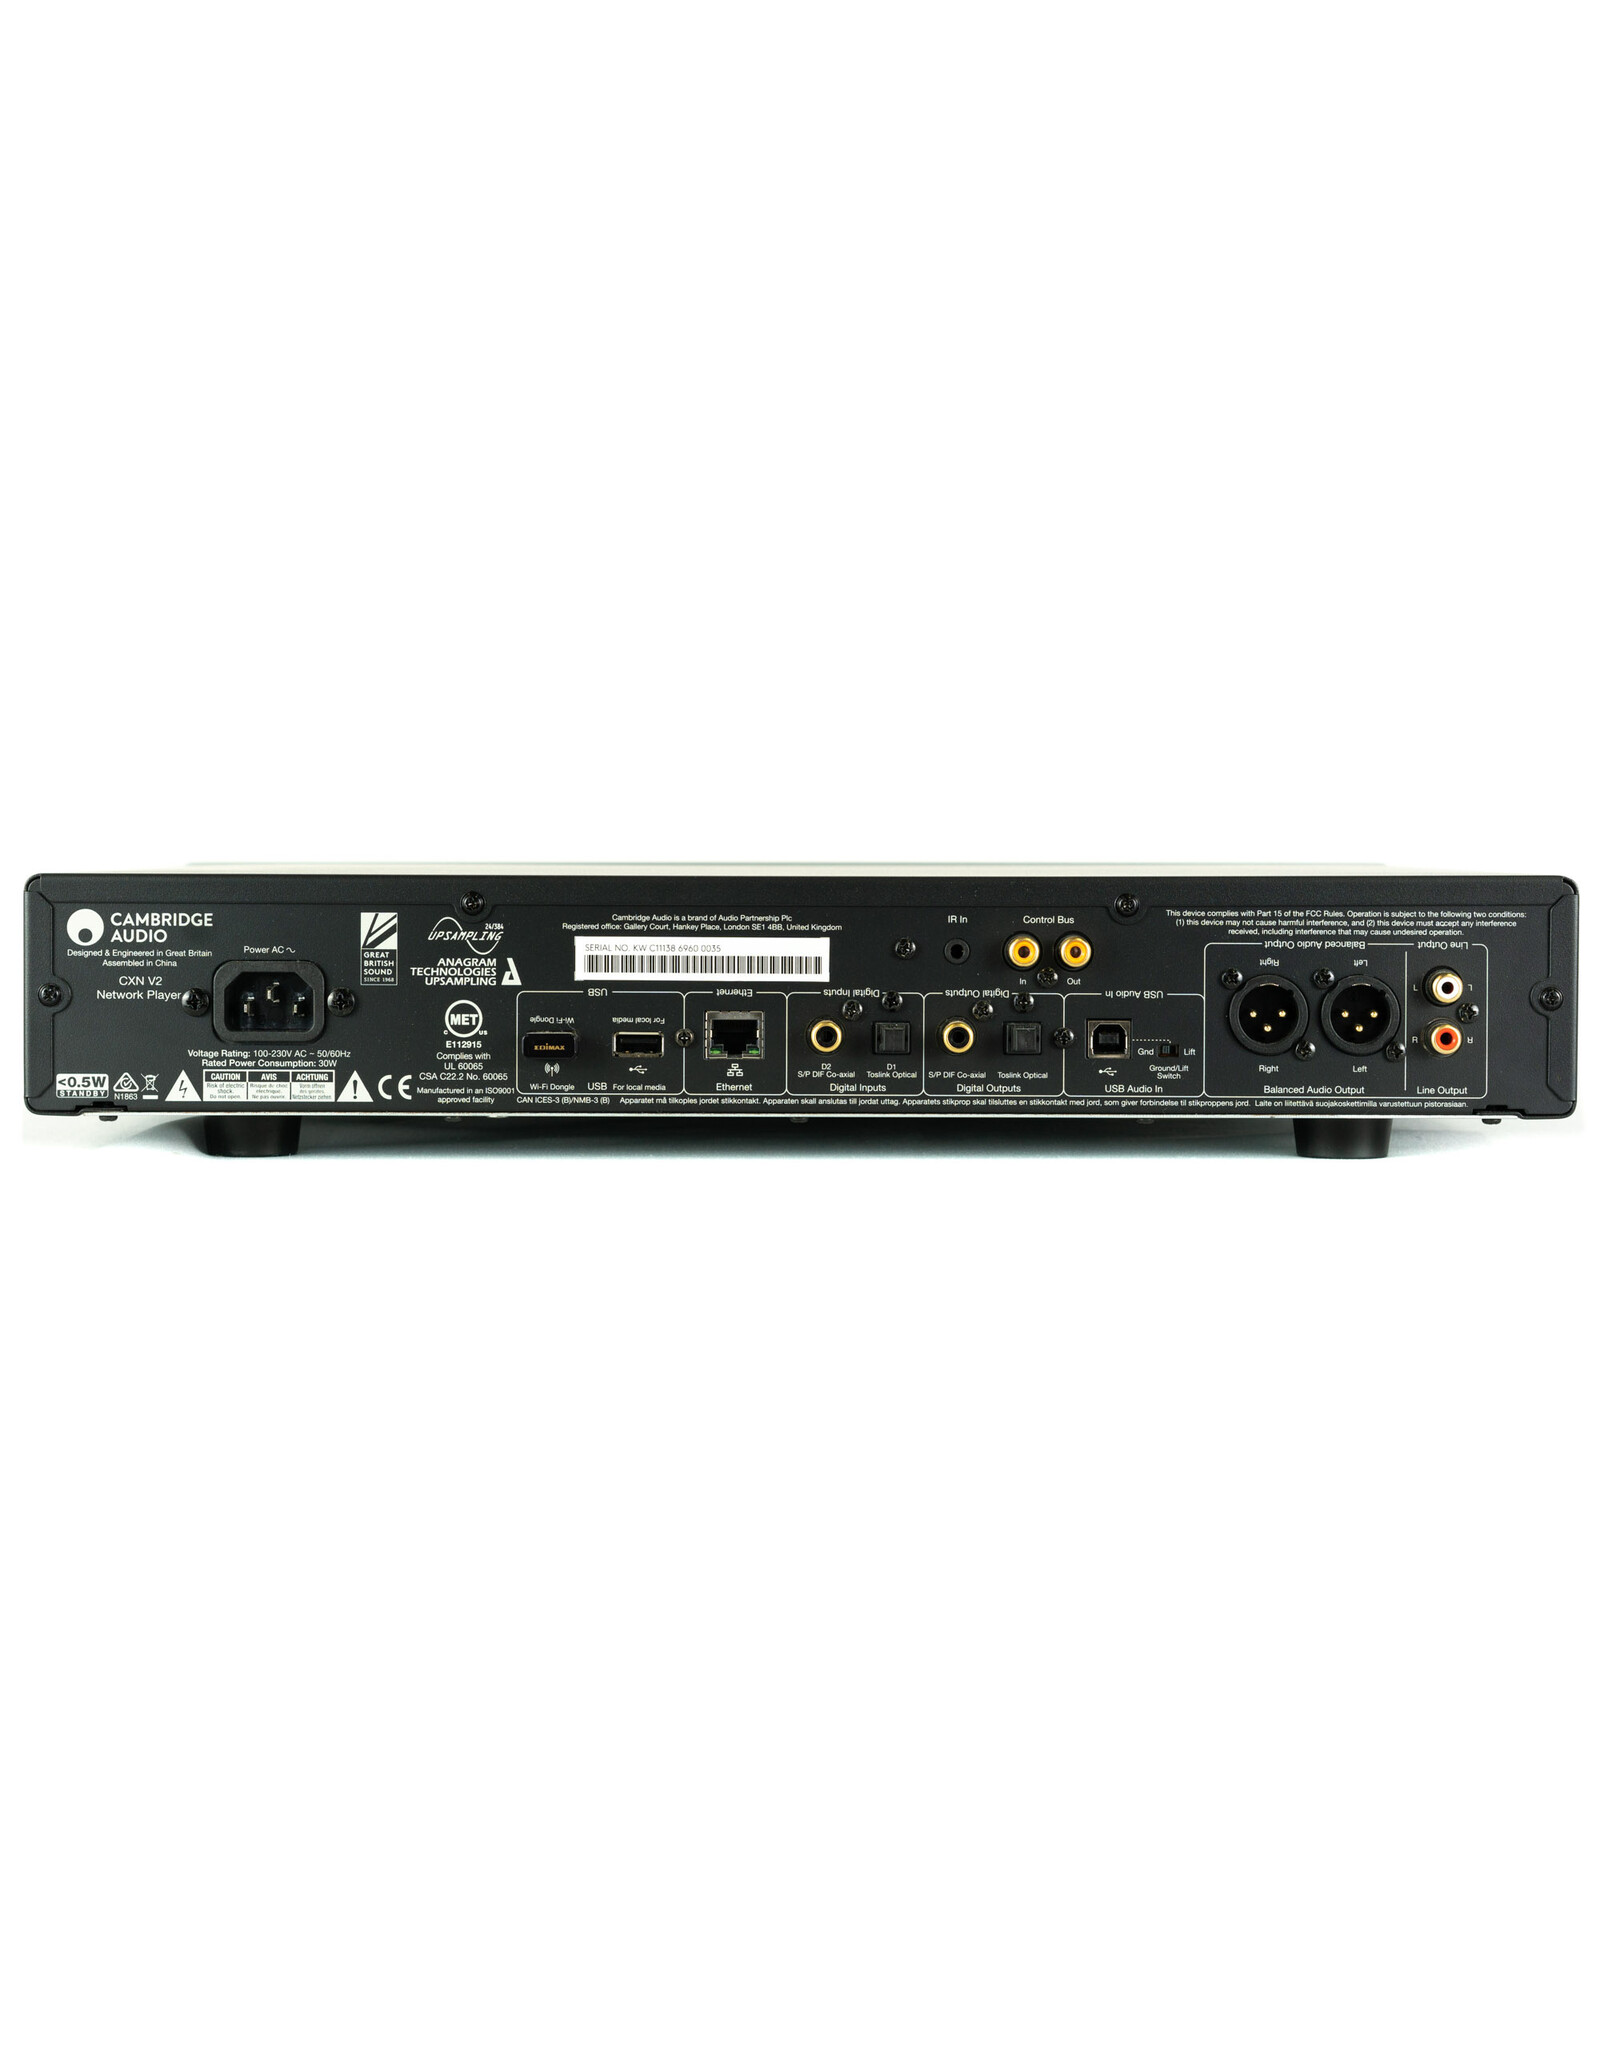 Cambridge Audio Cambridge Audio CXN v2 Series 2 Network Player USED